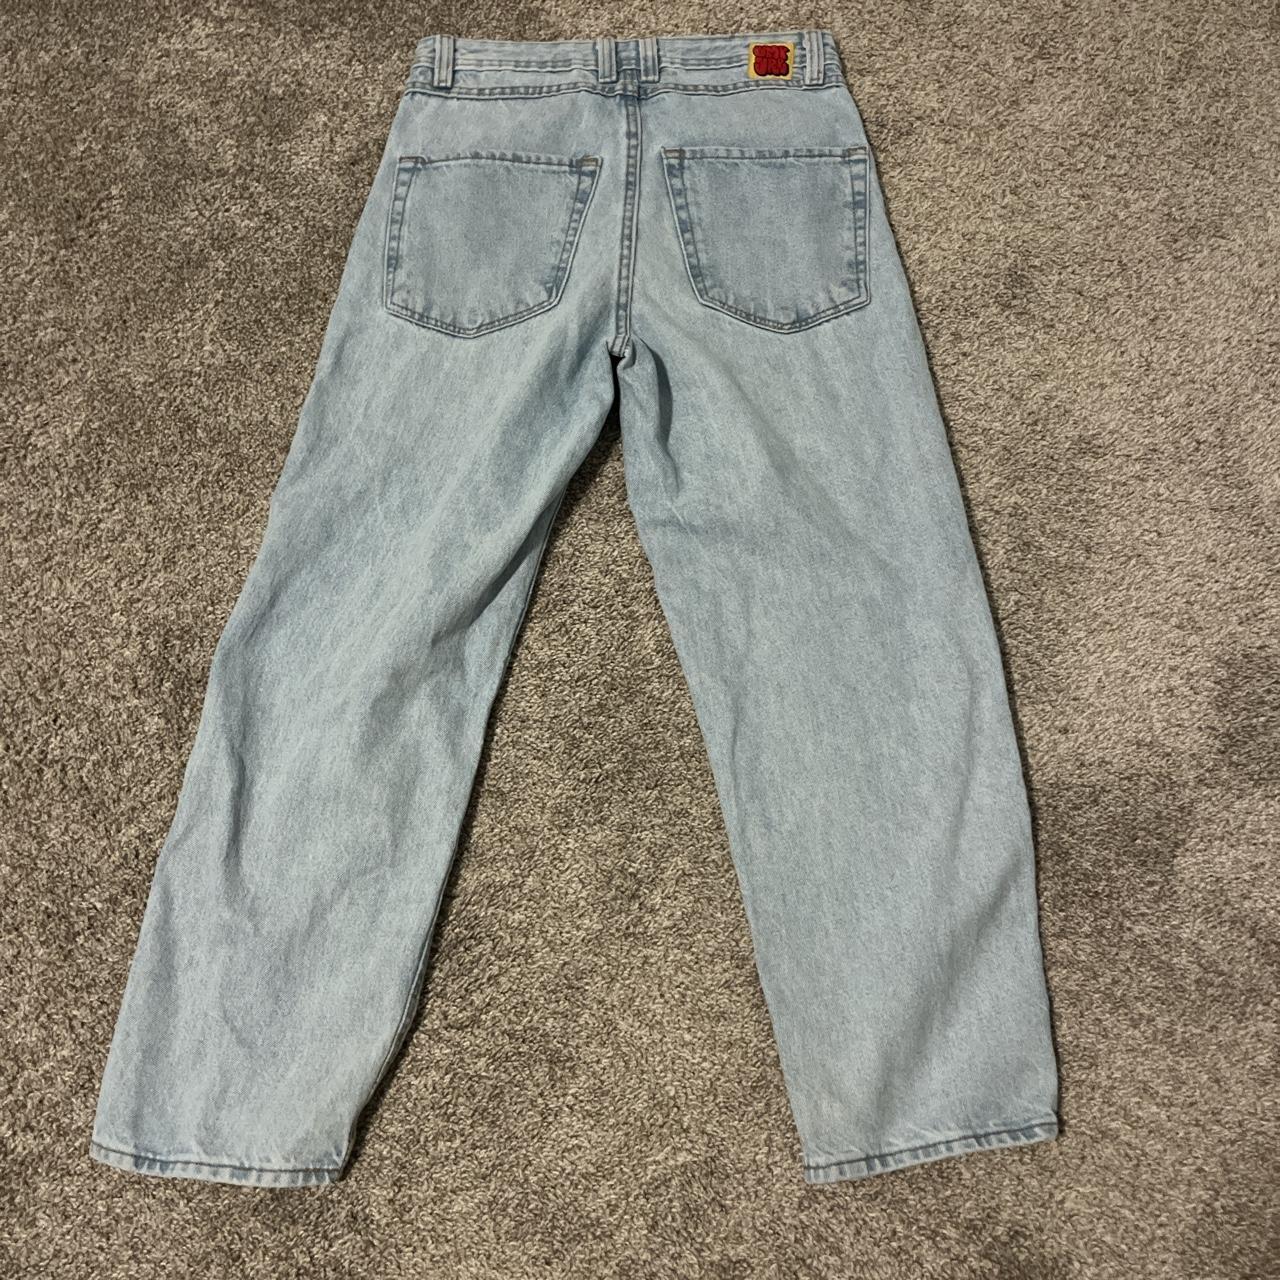 Baggy Empyre Skate jeans Size 28 - Depop